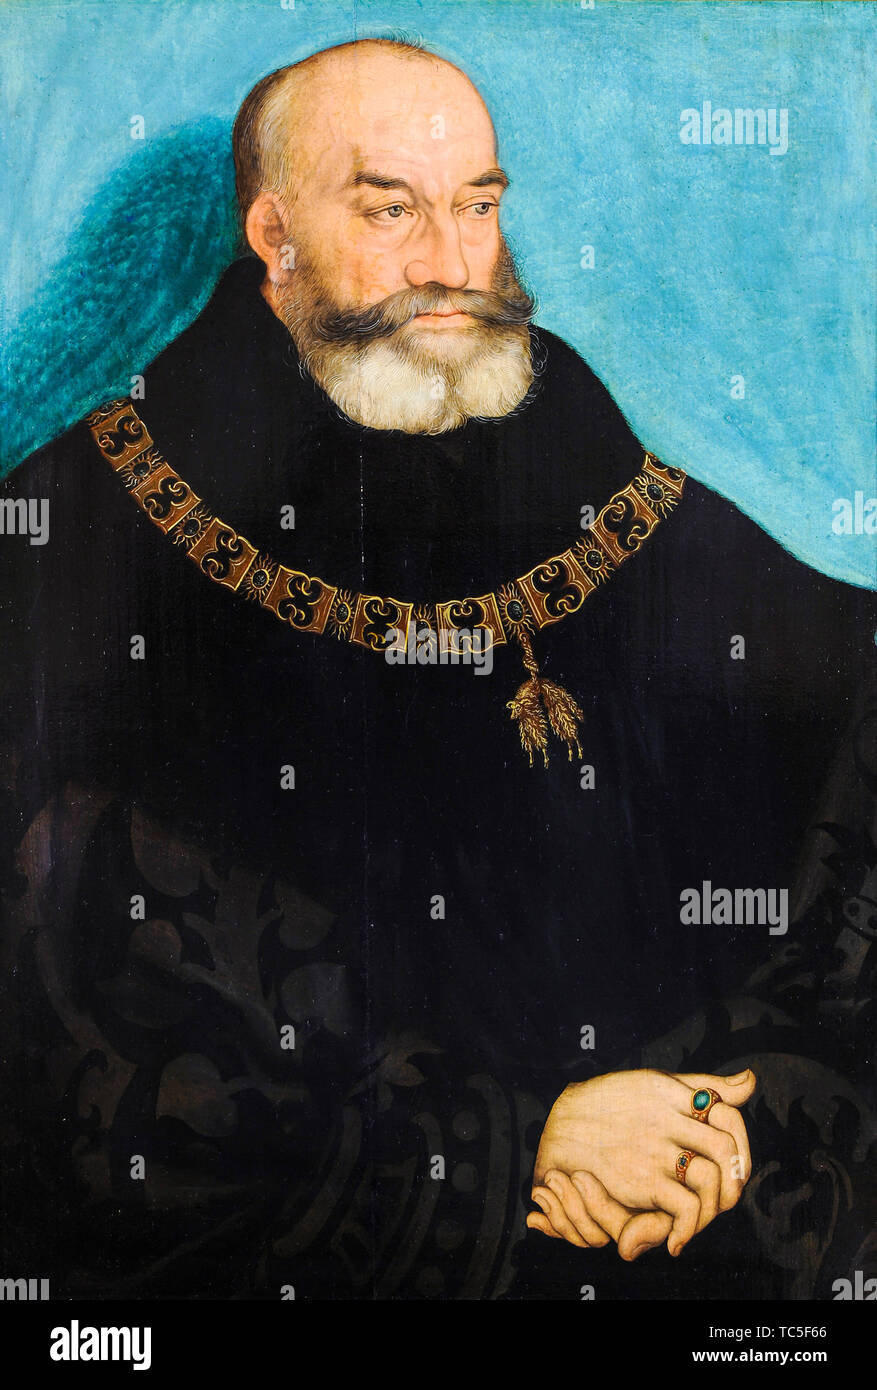 Lucas Cranach the Elder, George the Bearded, Duke of Saxony, 1471-1539, portrait painting, 1534 Stock Photo